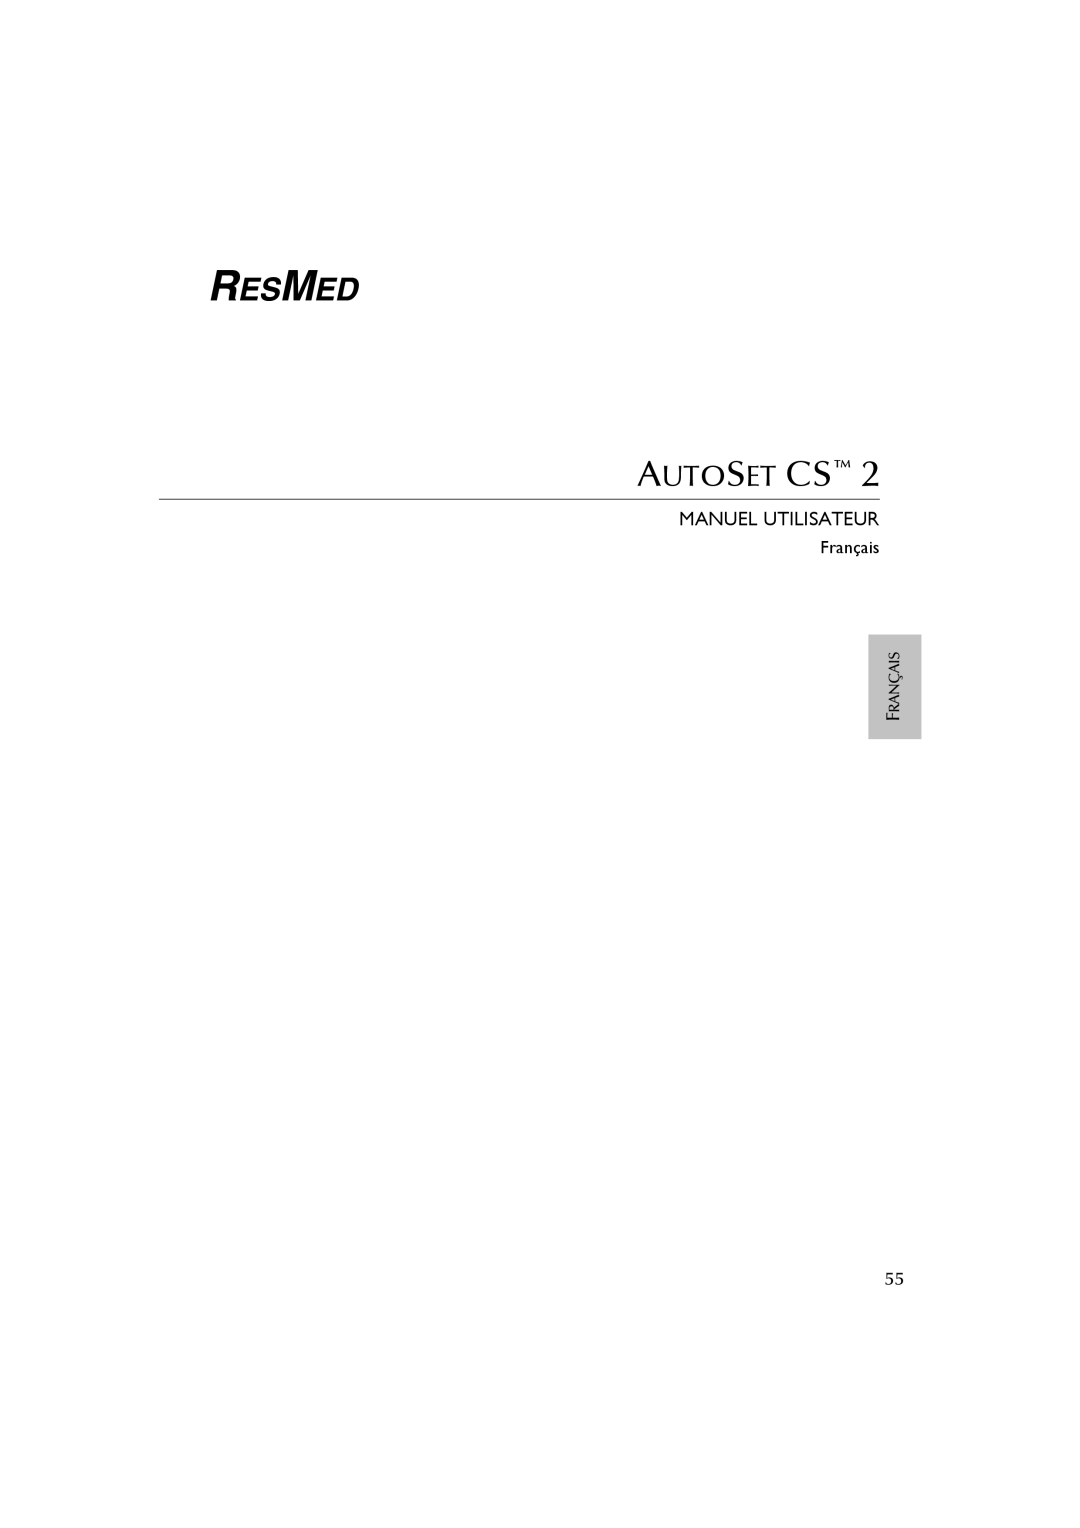 ResMed AutoSet CS 2 user manual Autoset Cs, Manuel Utilisateur, Français 